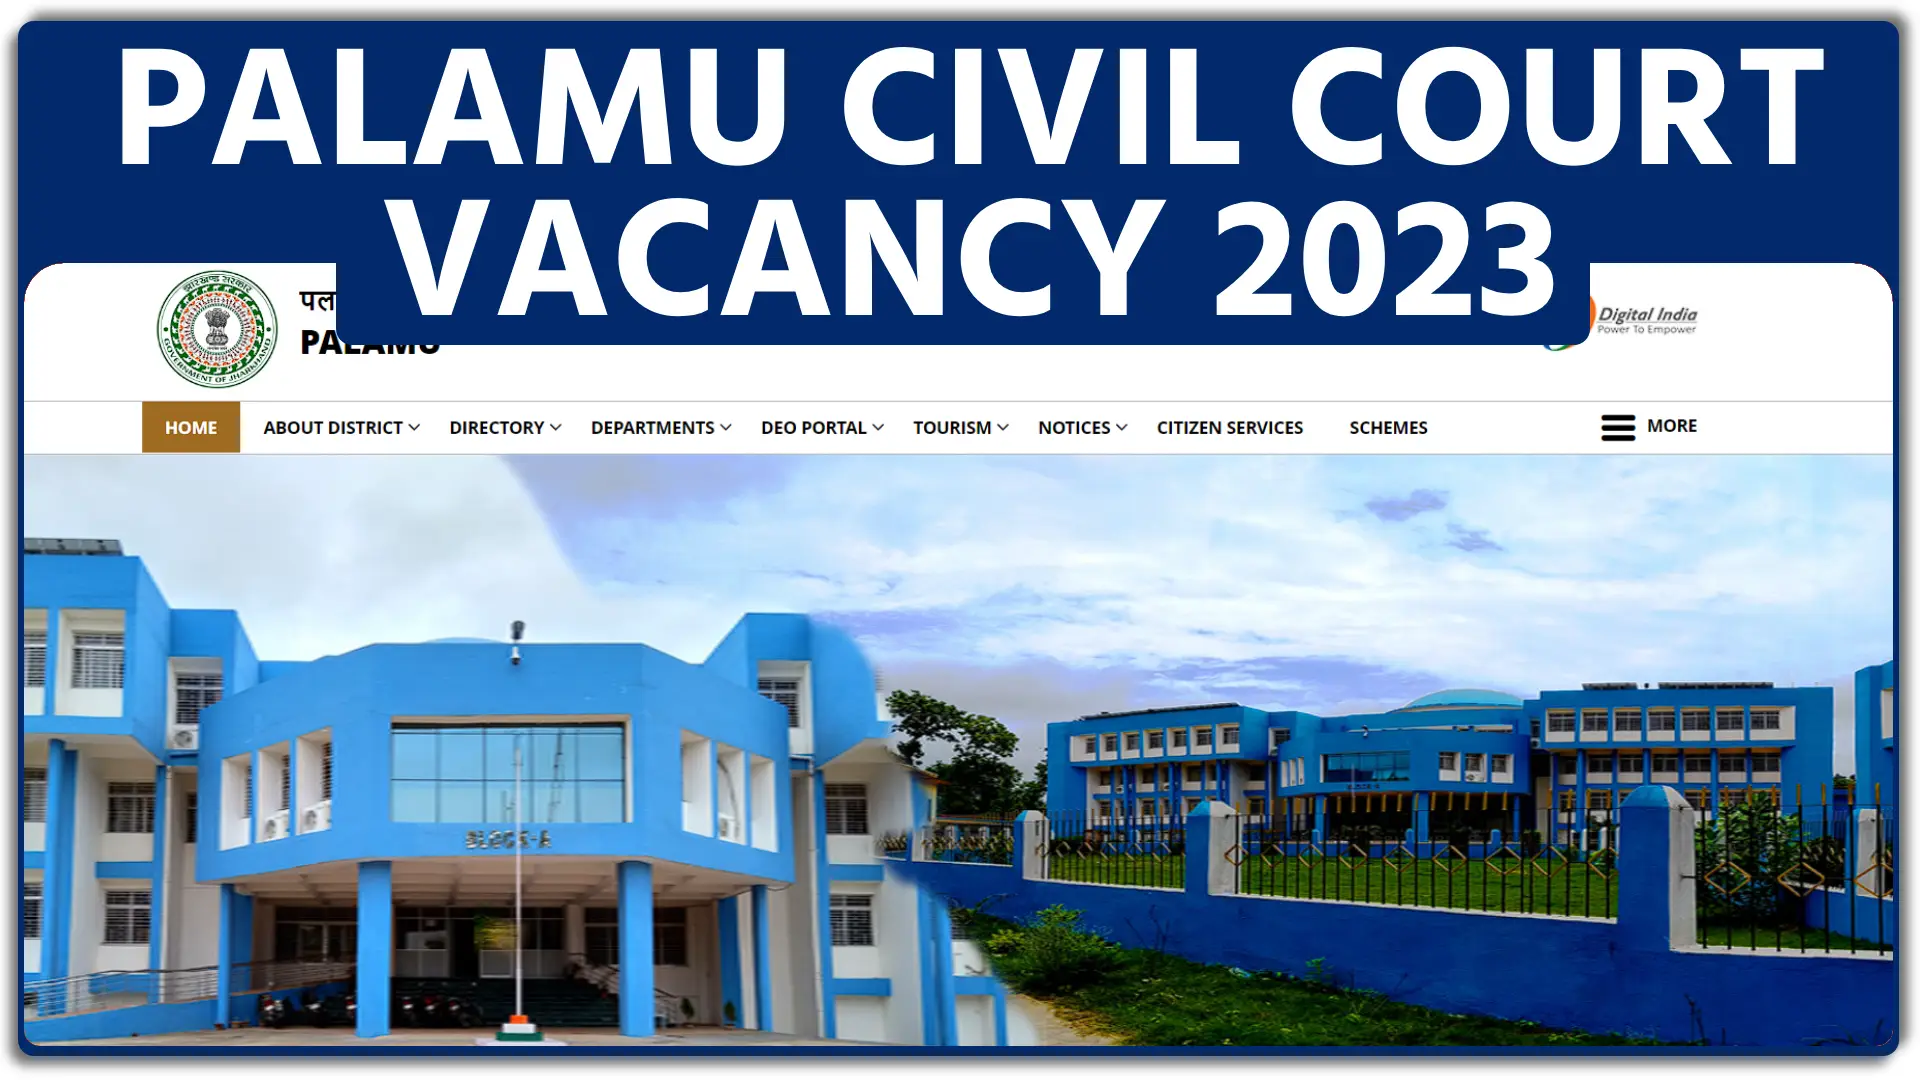 Palamu Civil Court Vacancy 2023